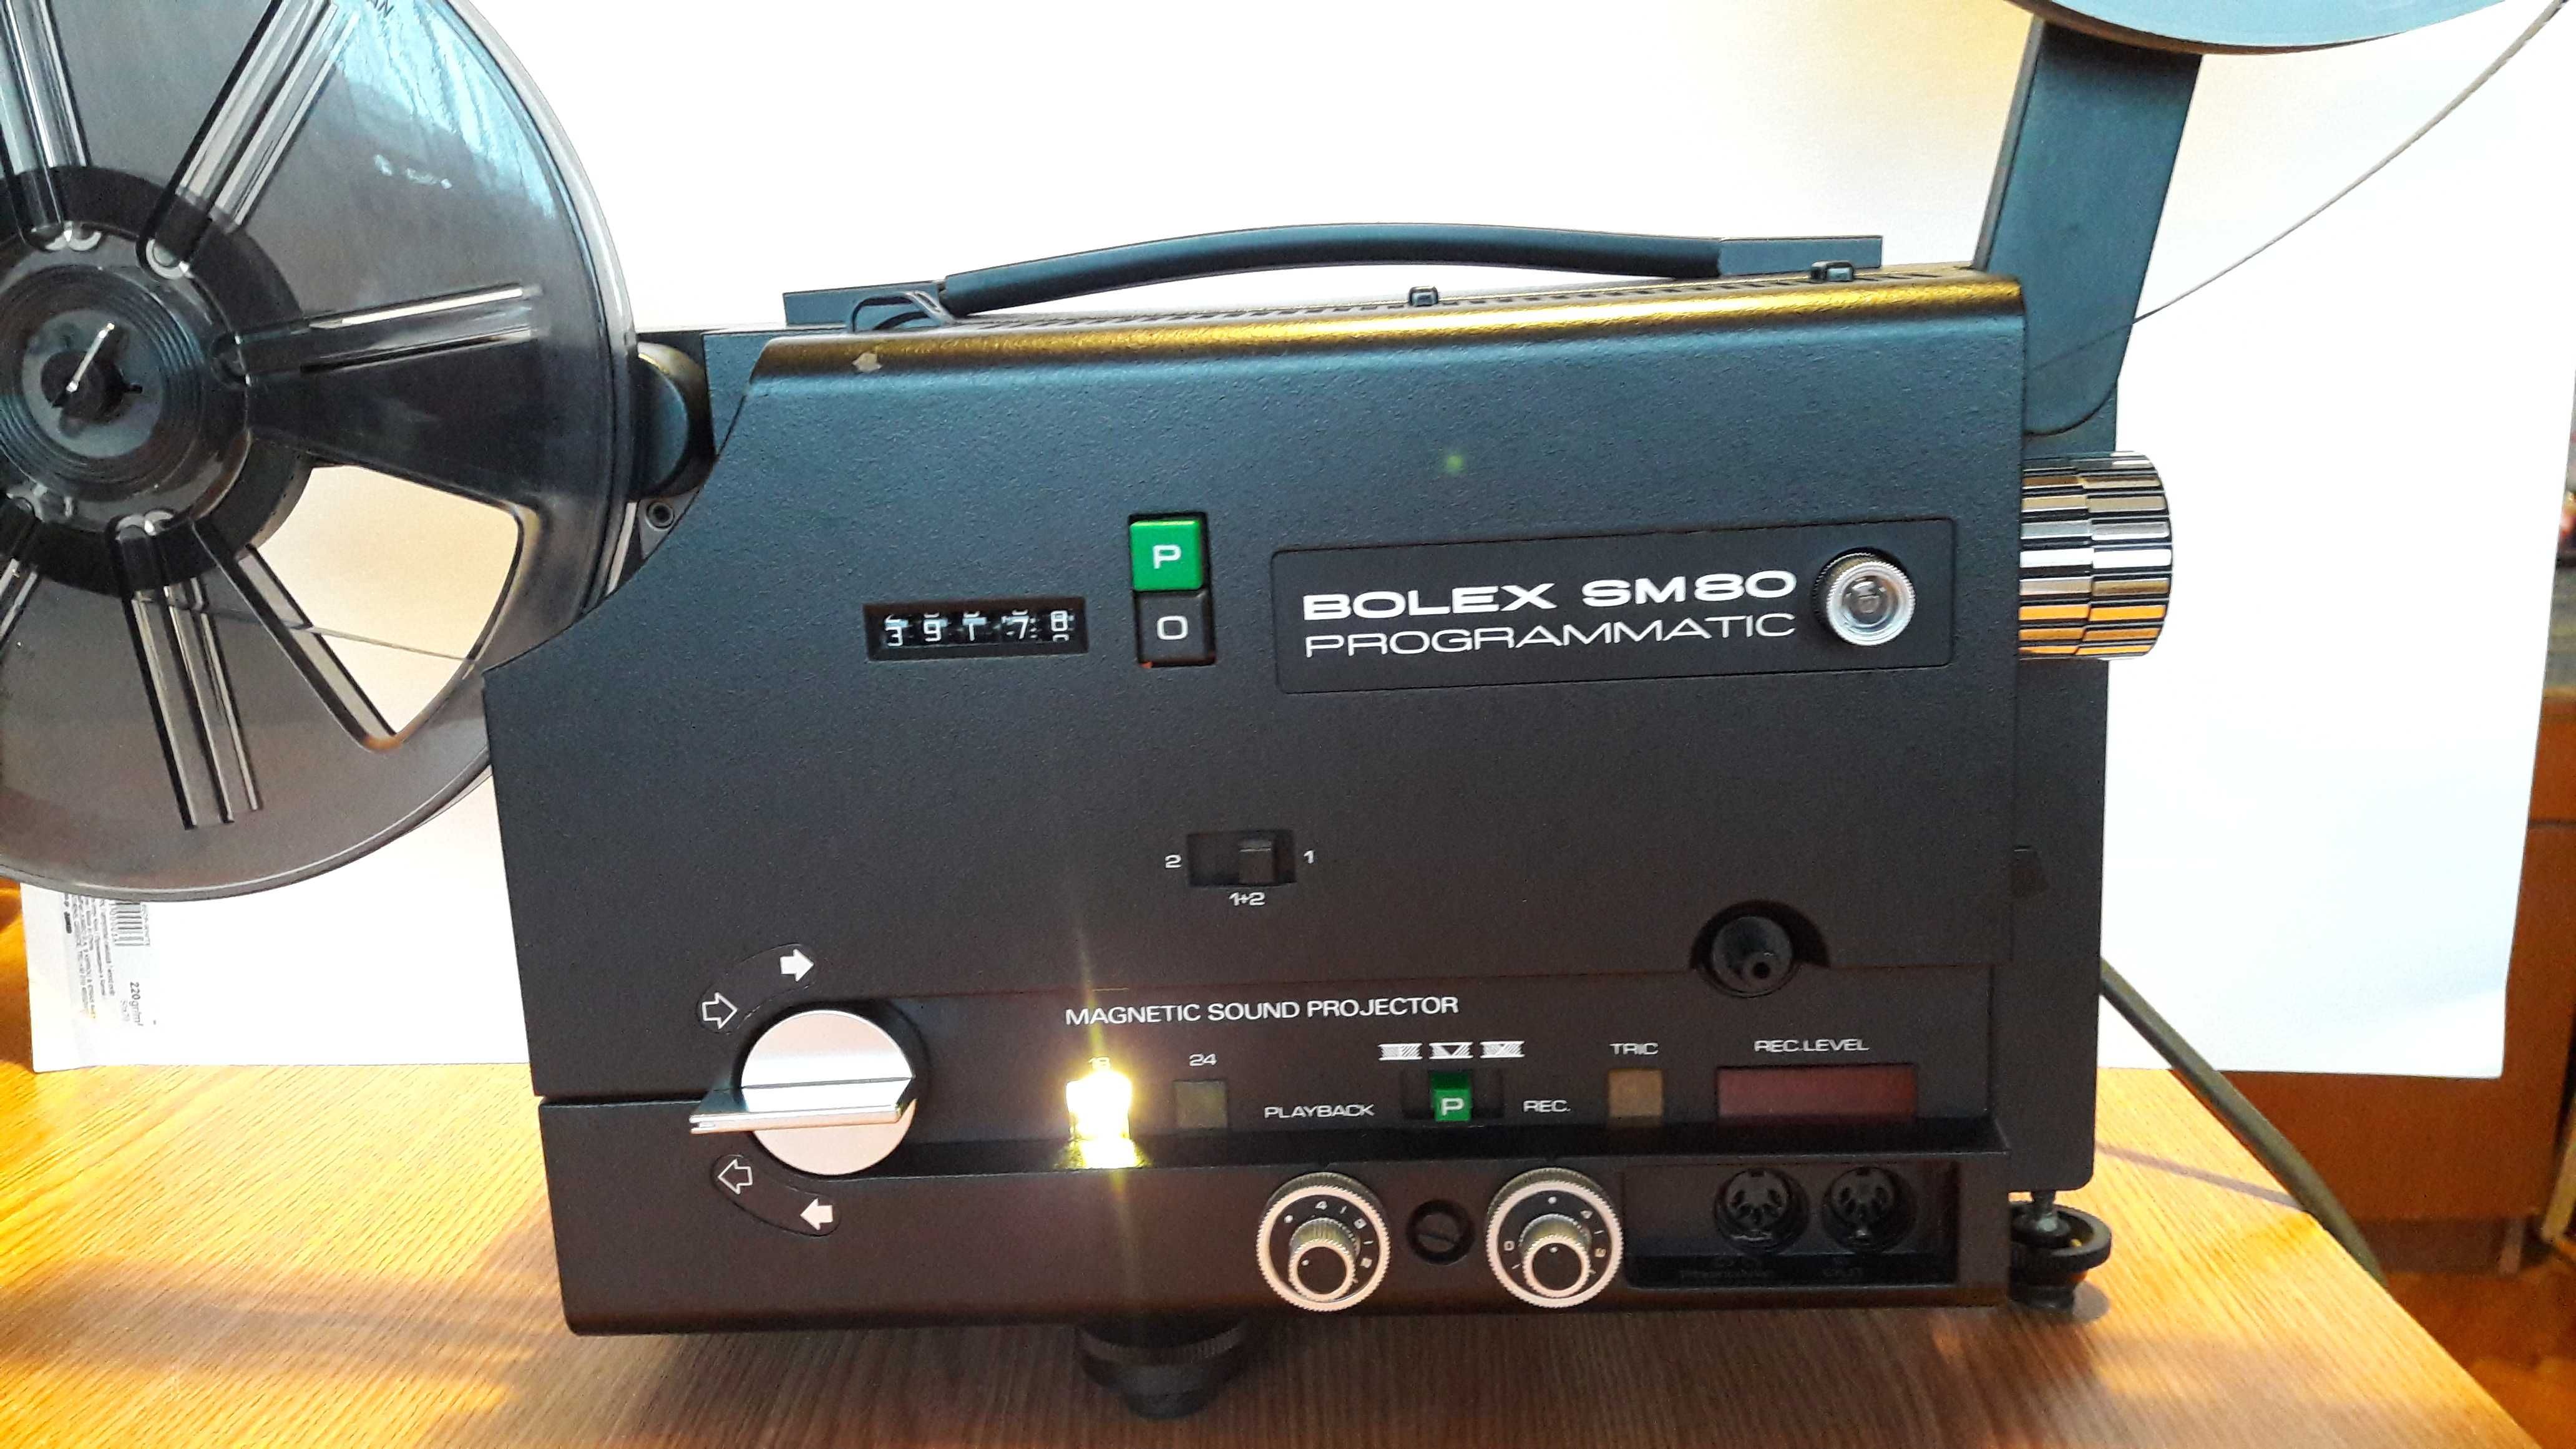 Proiector, aparat de proiectie film S8mm Bolex SM80 Programatic